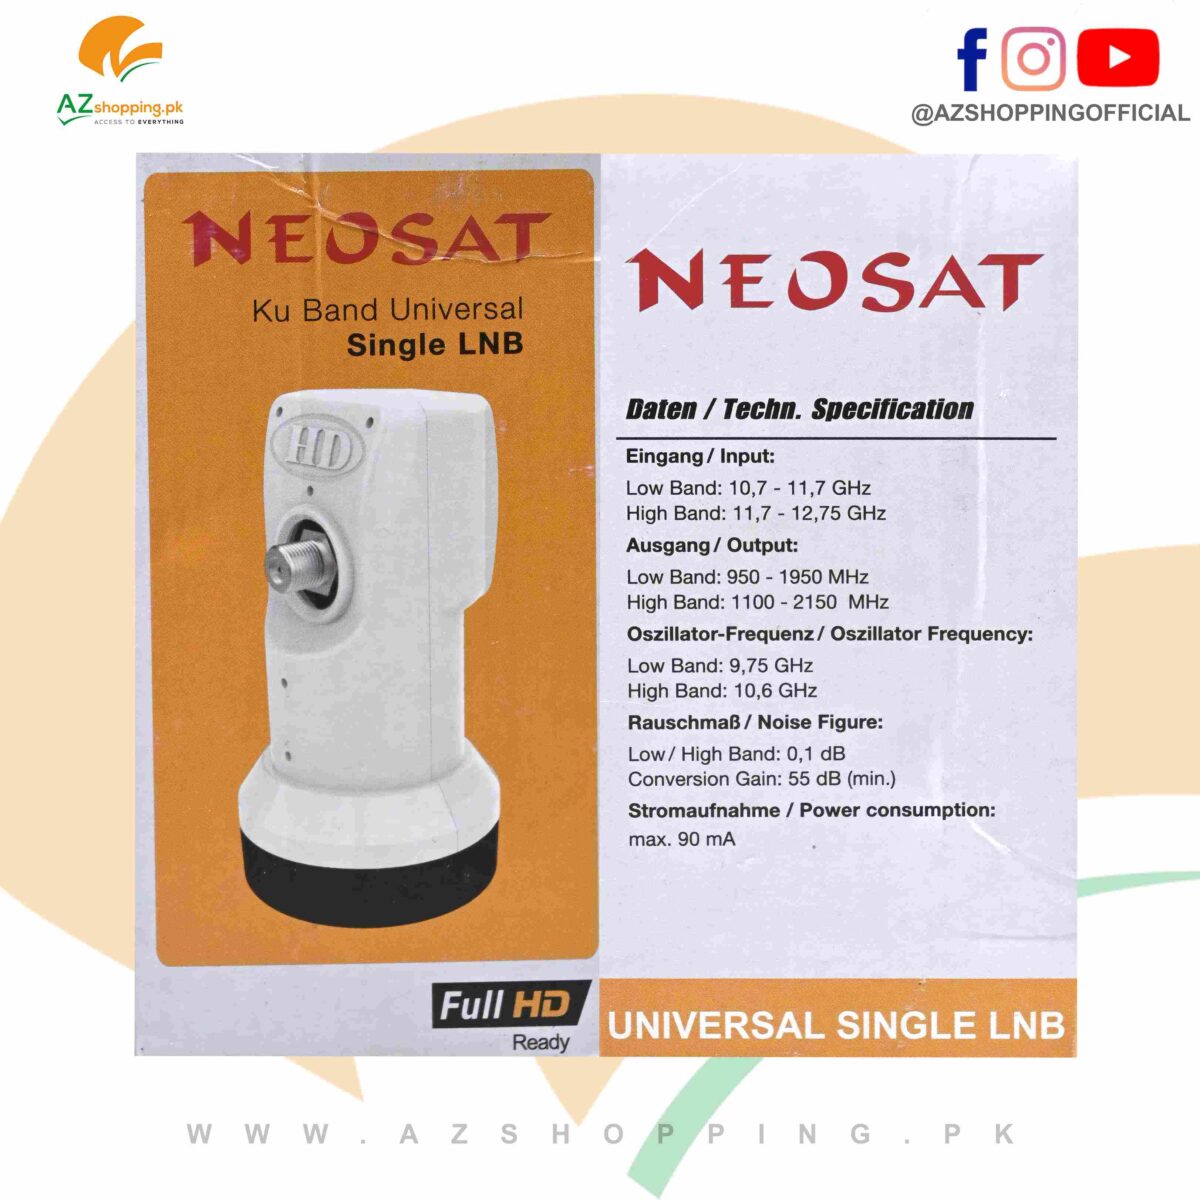 Neosat Ku Band Digital Universal Single LNB For Full HD Satellite Tv Dish Antenna Signals High Gain Low Noise - Waterproof